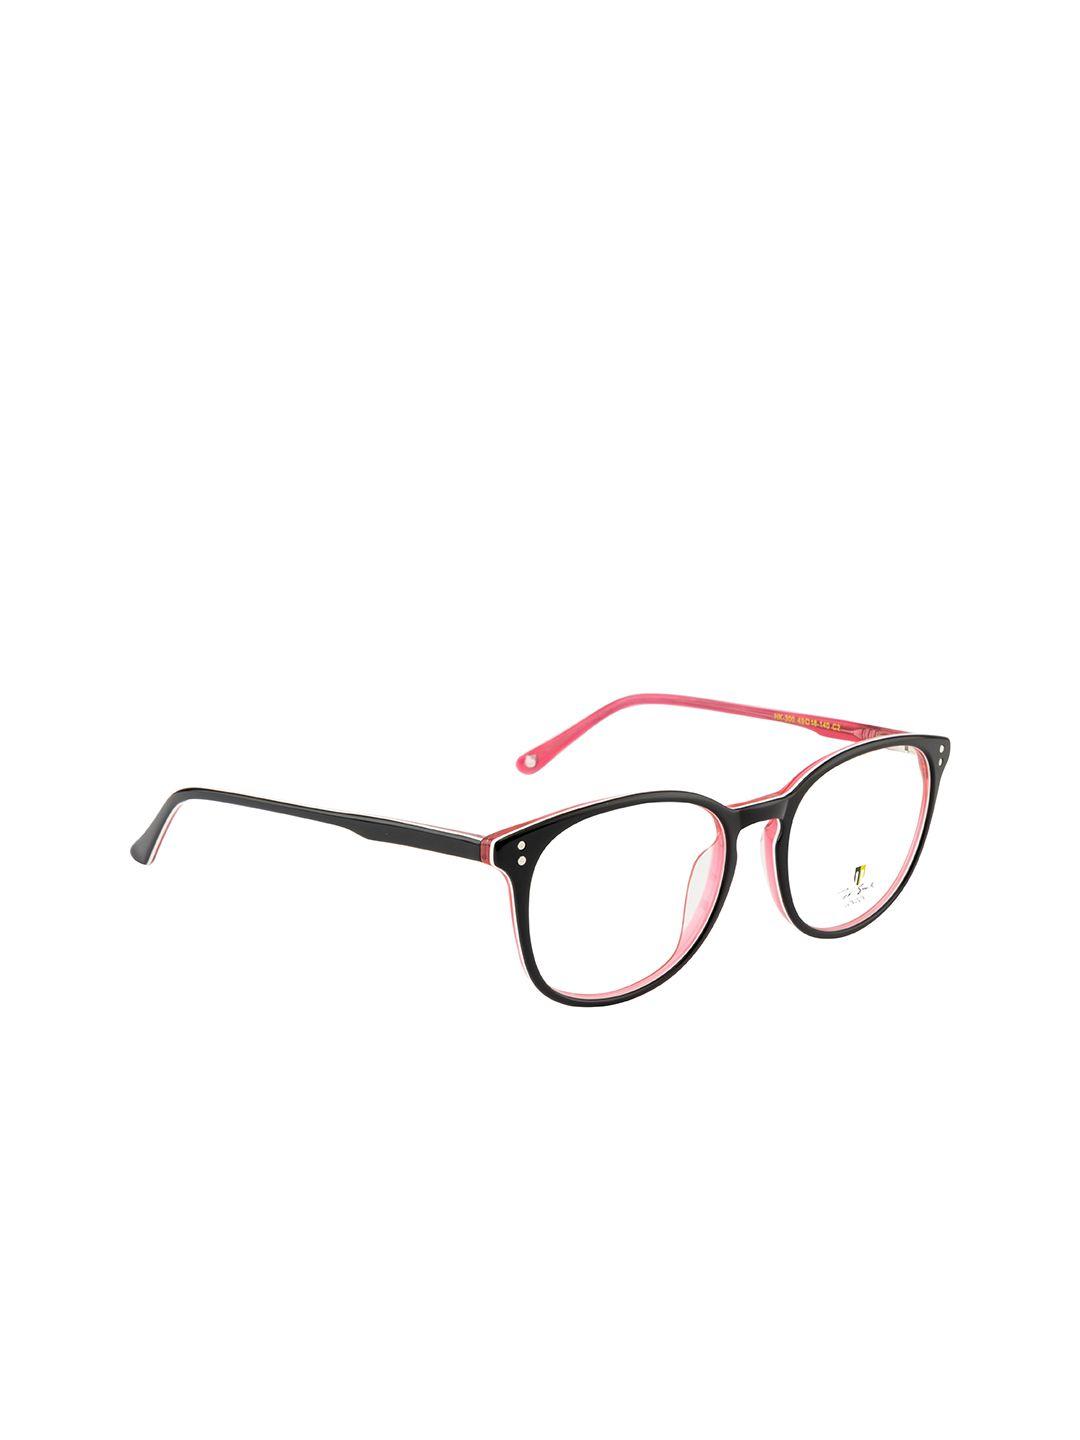 ted smith unisex black & pink solid full rim round frames eyeglasses